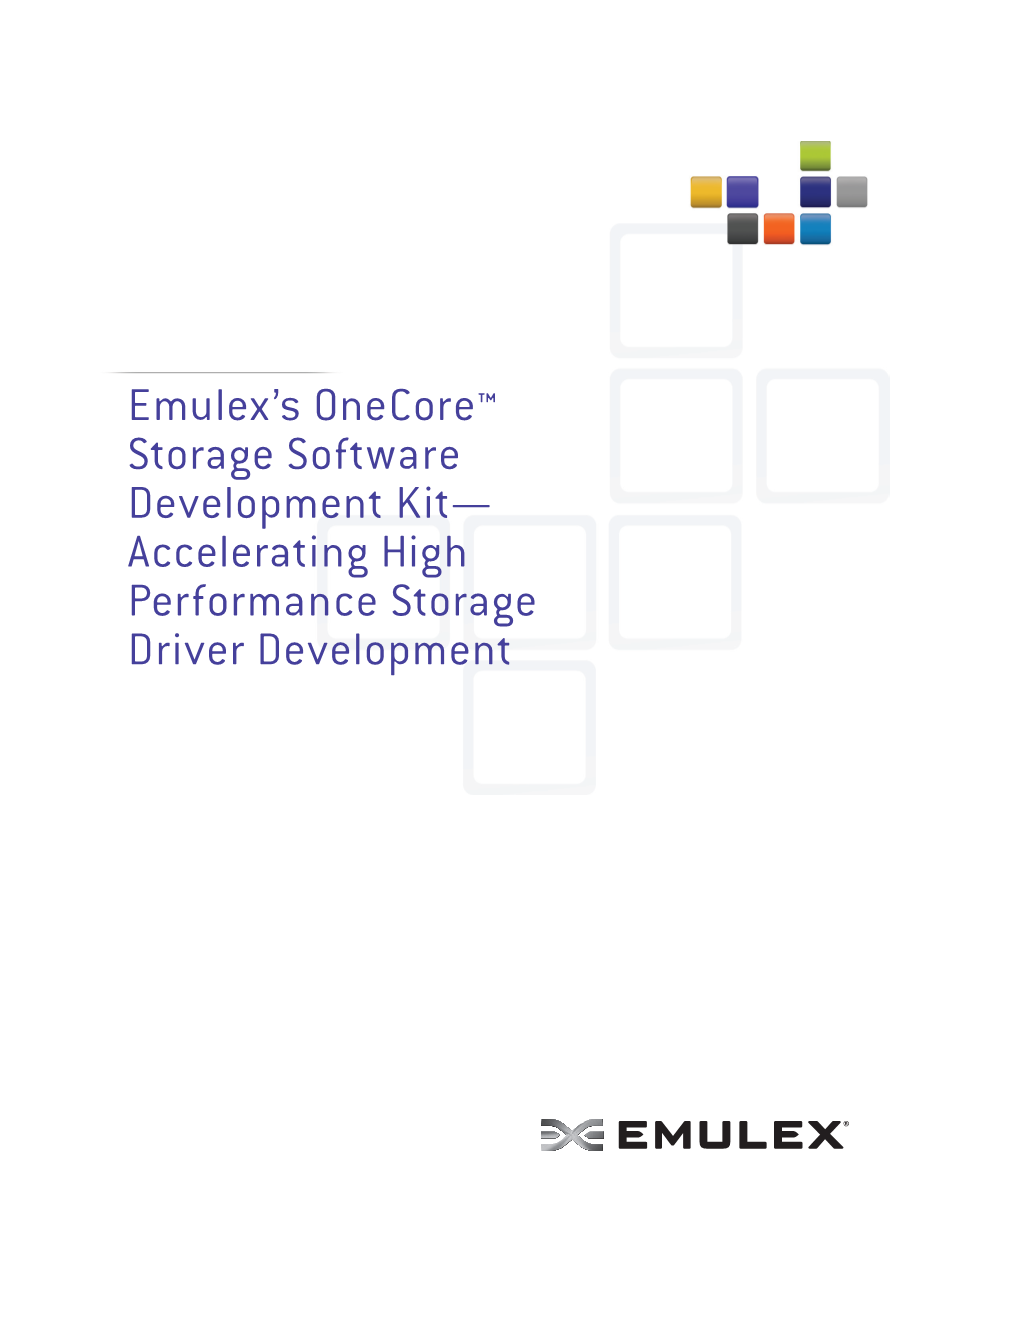 Emulex's Onecore™ Storage Software Development Kit